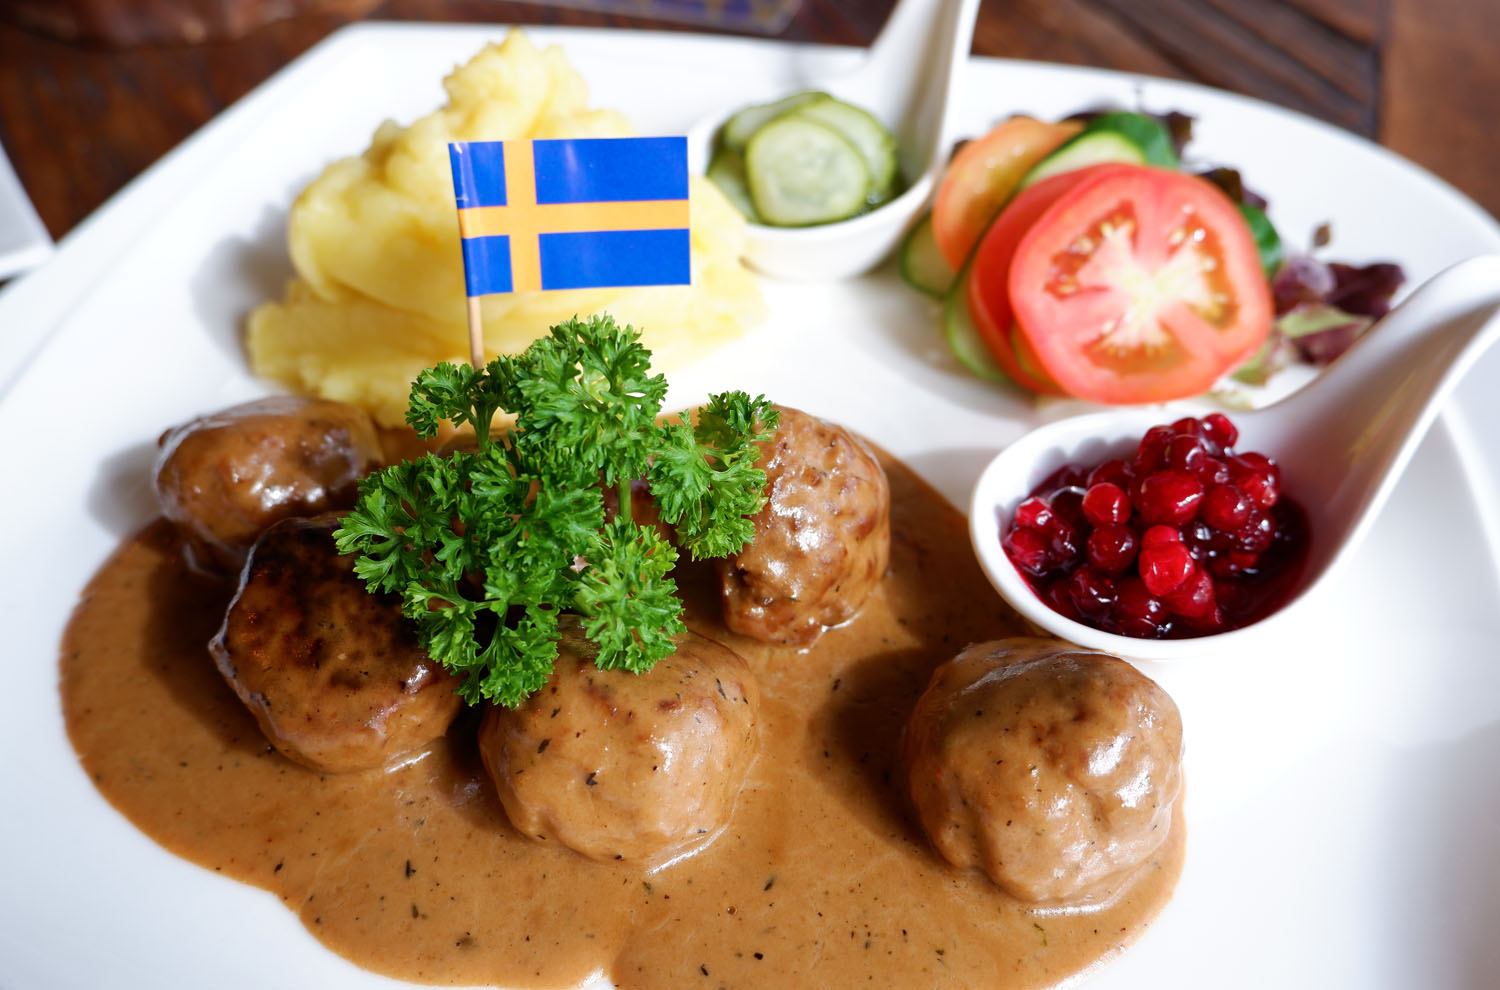 Swedish meatballs “köttbullar” (199 baht).